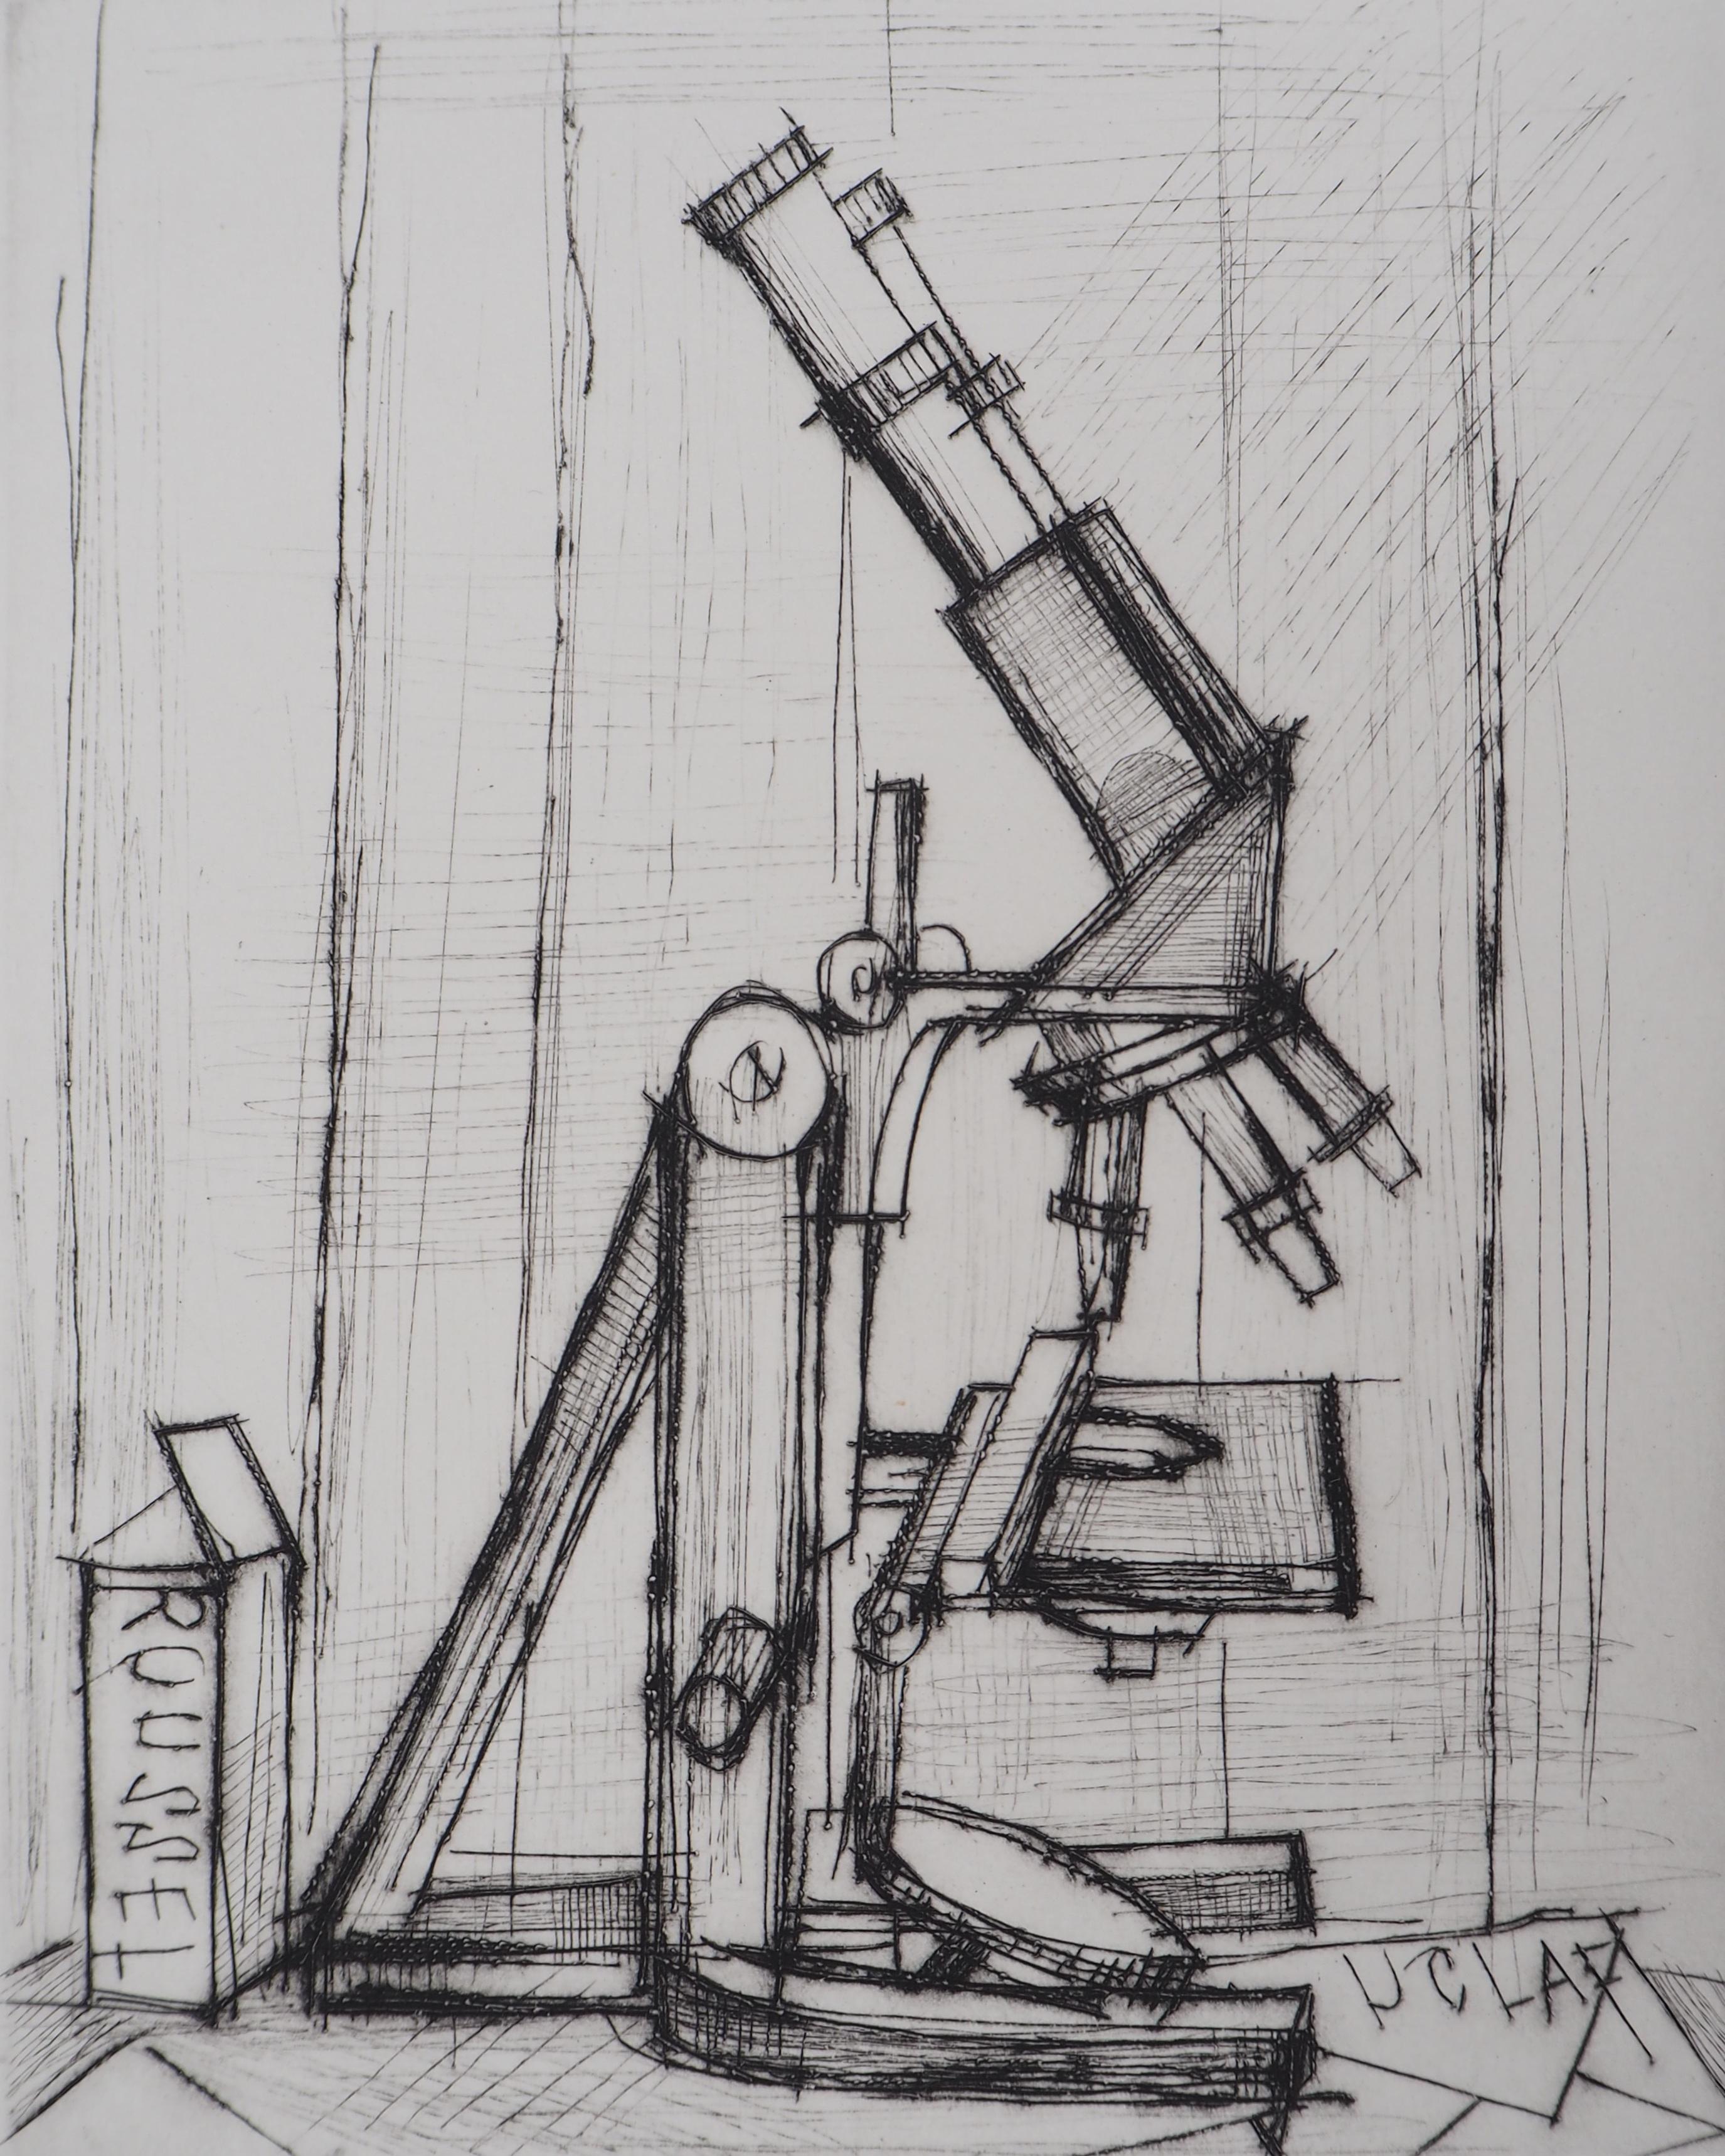 Bernard BUFFET
Microscope, 1959

Original etching 
Handsigned in pencil
Numbered / 100 copies
On vellum BFK Rives 38 x 28 cm (c. 11 x 14.9 inch)

REFRENCES : Catalogue raisonne Bernard Buffet Graveur, référence Rheims #23

Excellent condition